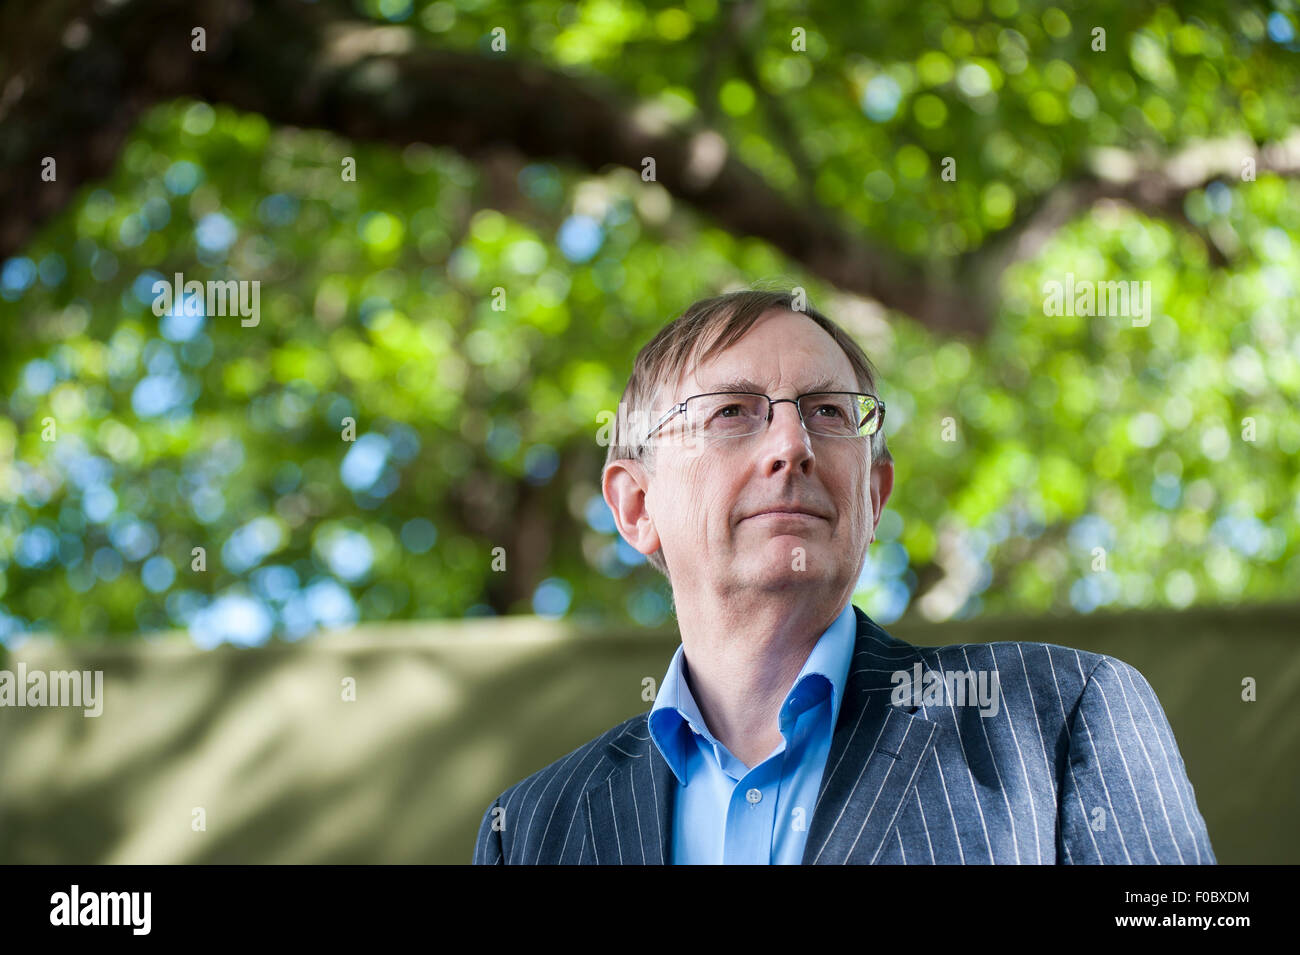 Graham Paul Farmelo, biographer and science writer, appearing at the Edinburgh International Book Festival 2014. Edinburgh, UK. Stock Photo